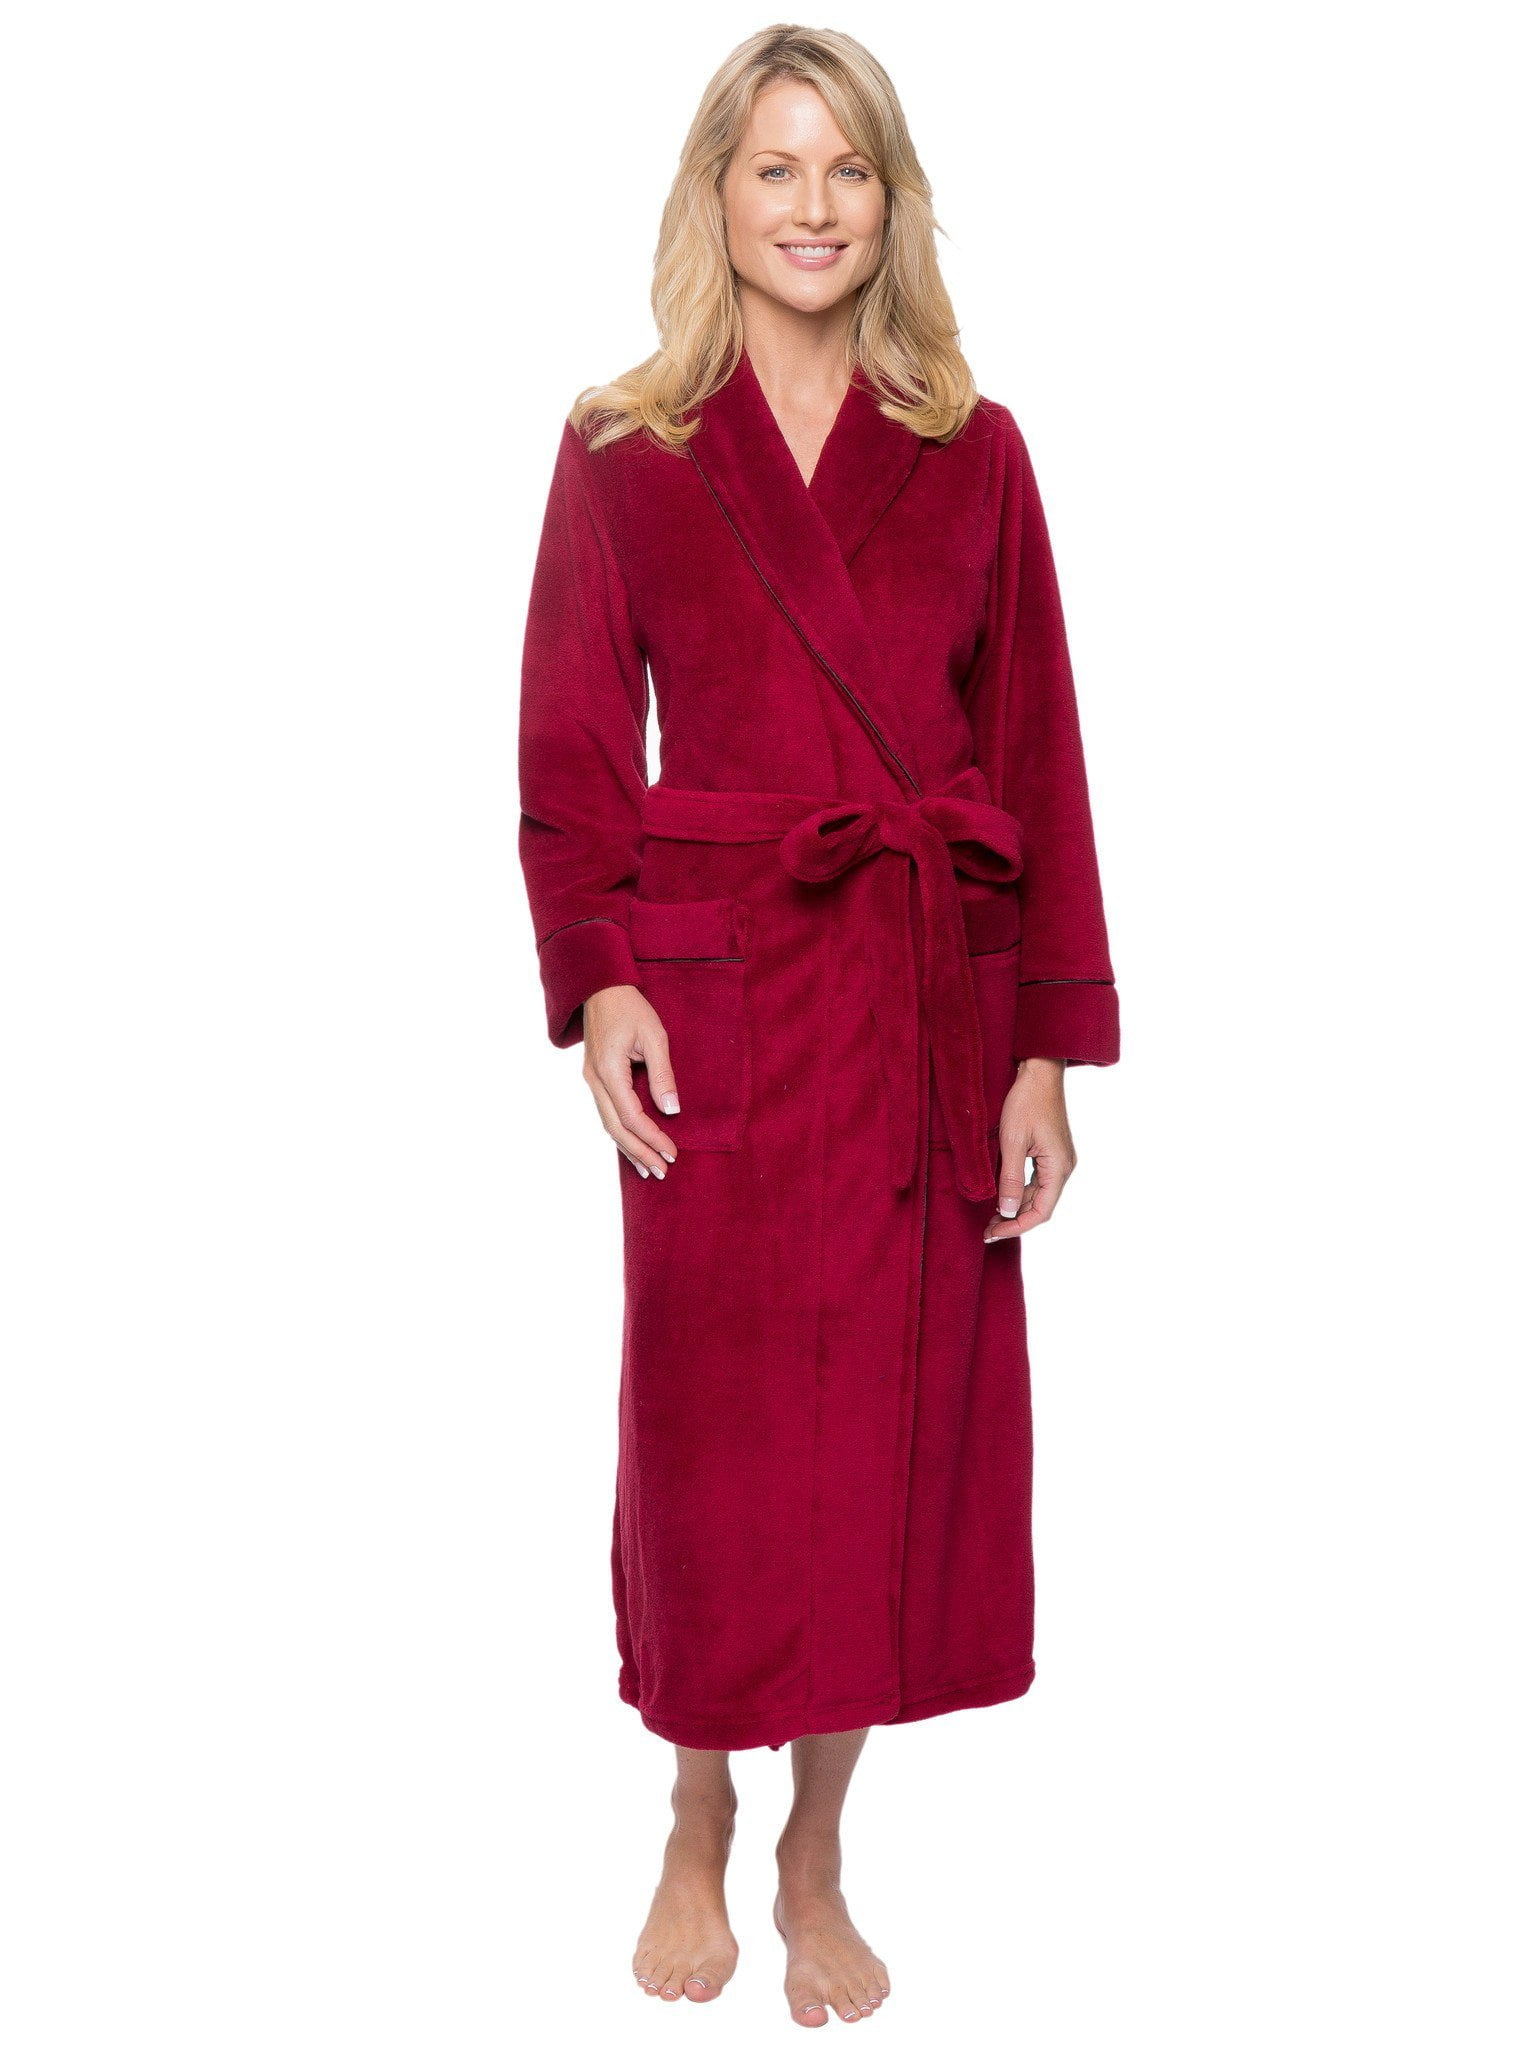 Noble Mount - Women's Premium Coral Fleece Plush Spa/Bath Robe - Red ...